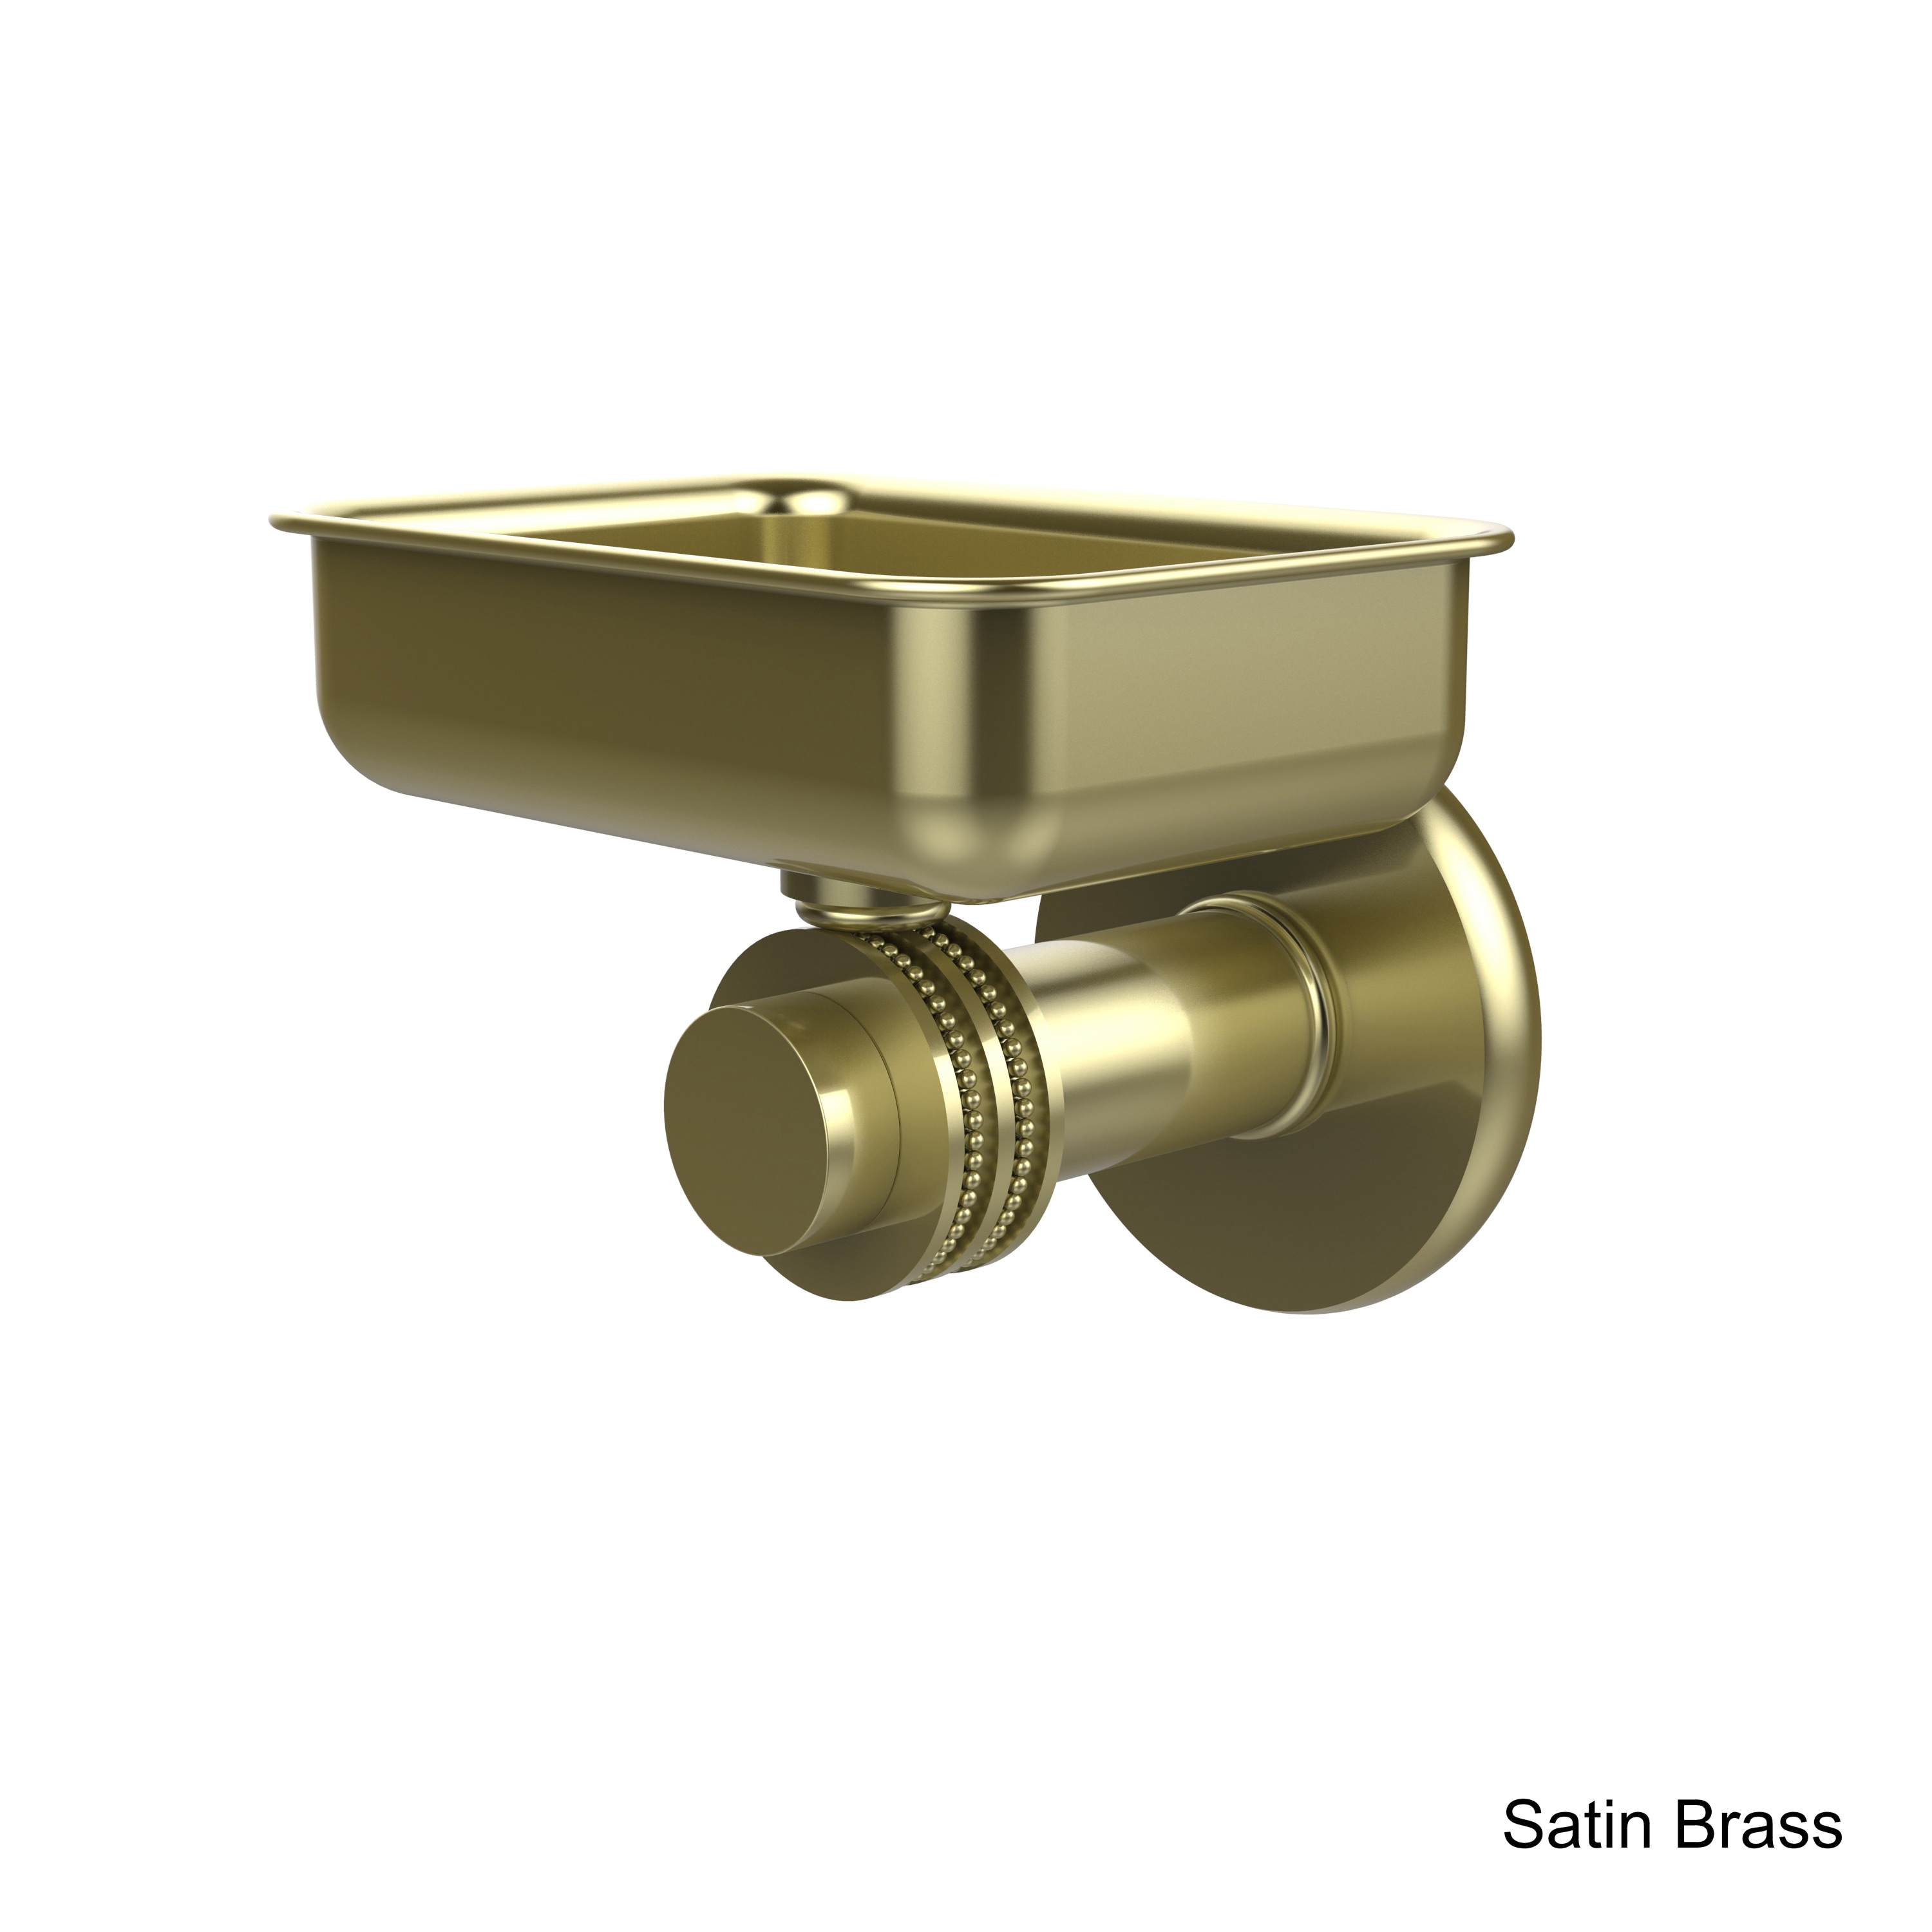 Allied Brass Home Decor - Bed Bath & Beyond